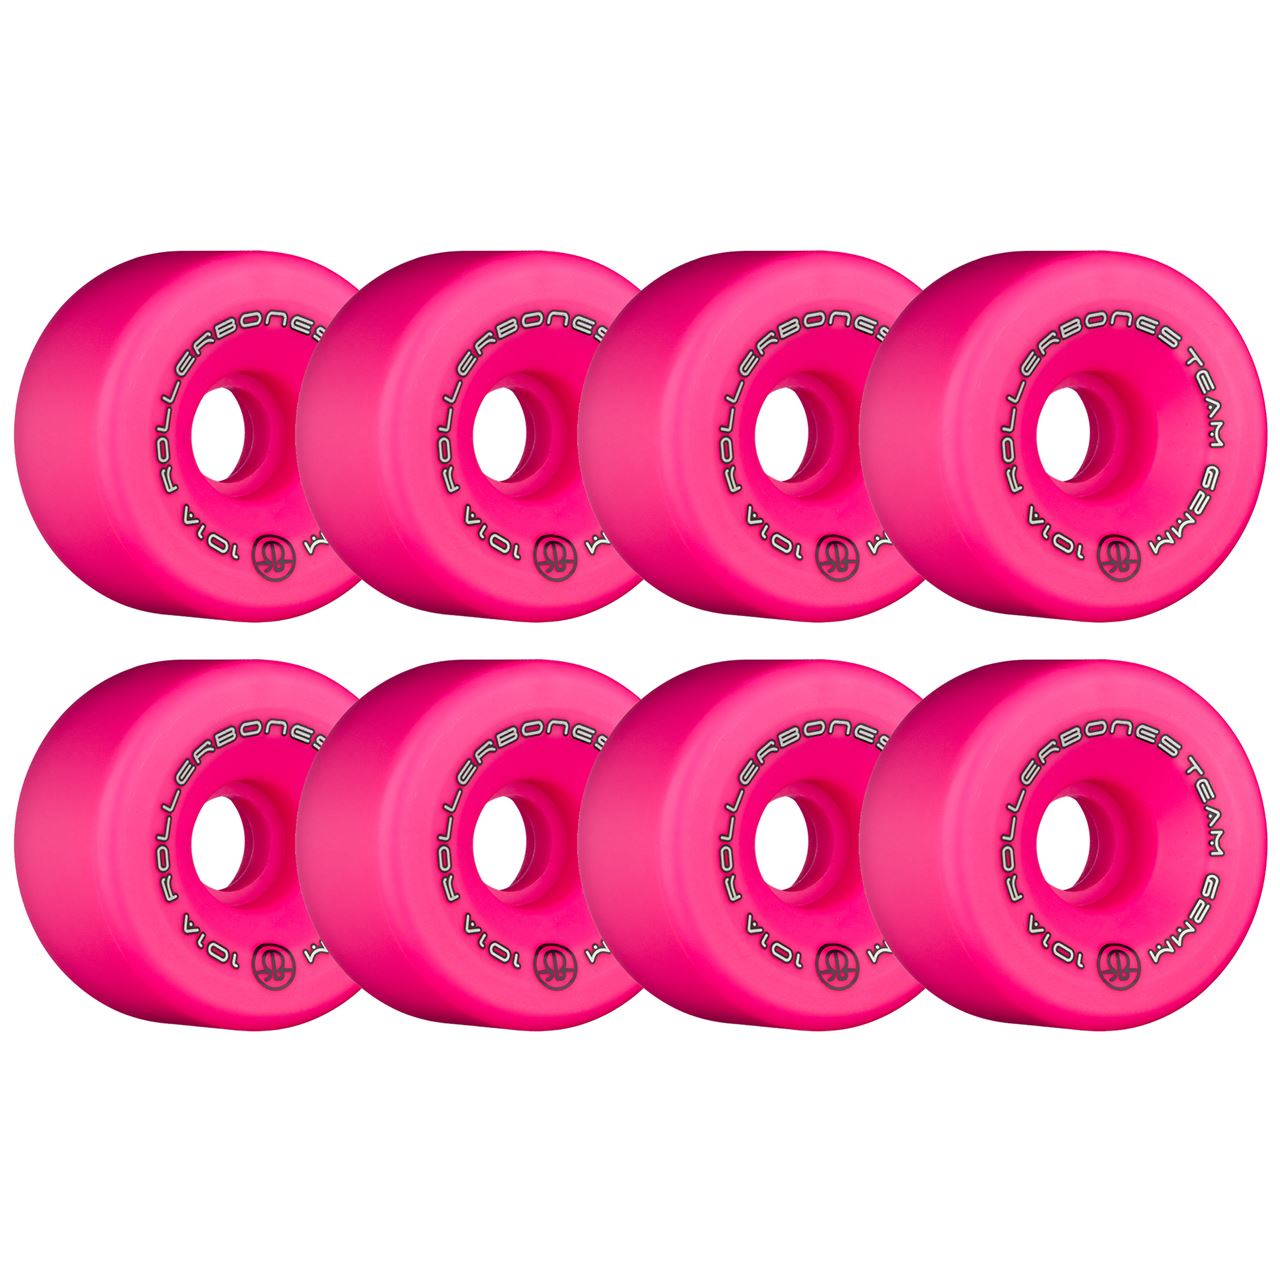 Rollerbones Team Logo Wheels Pink 62mm 101a - Set of 8